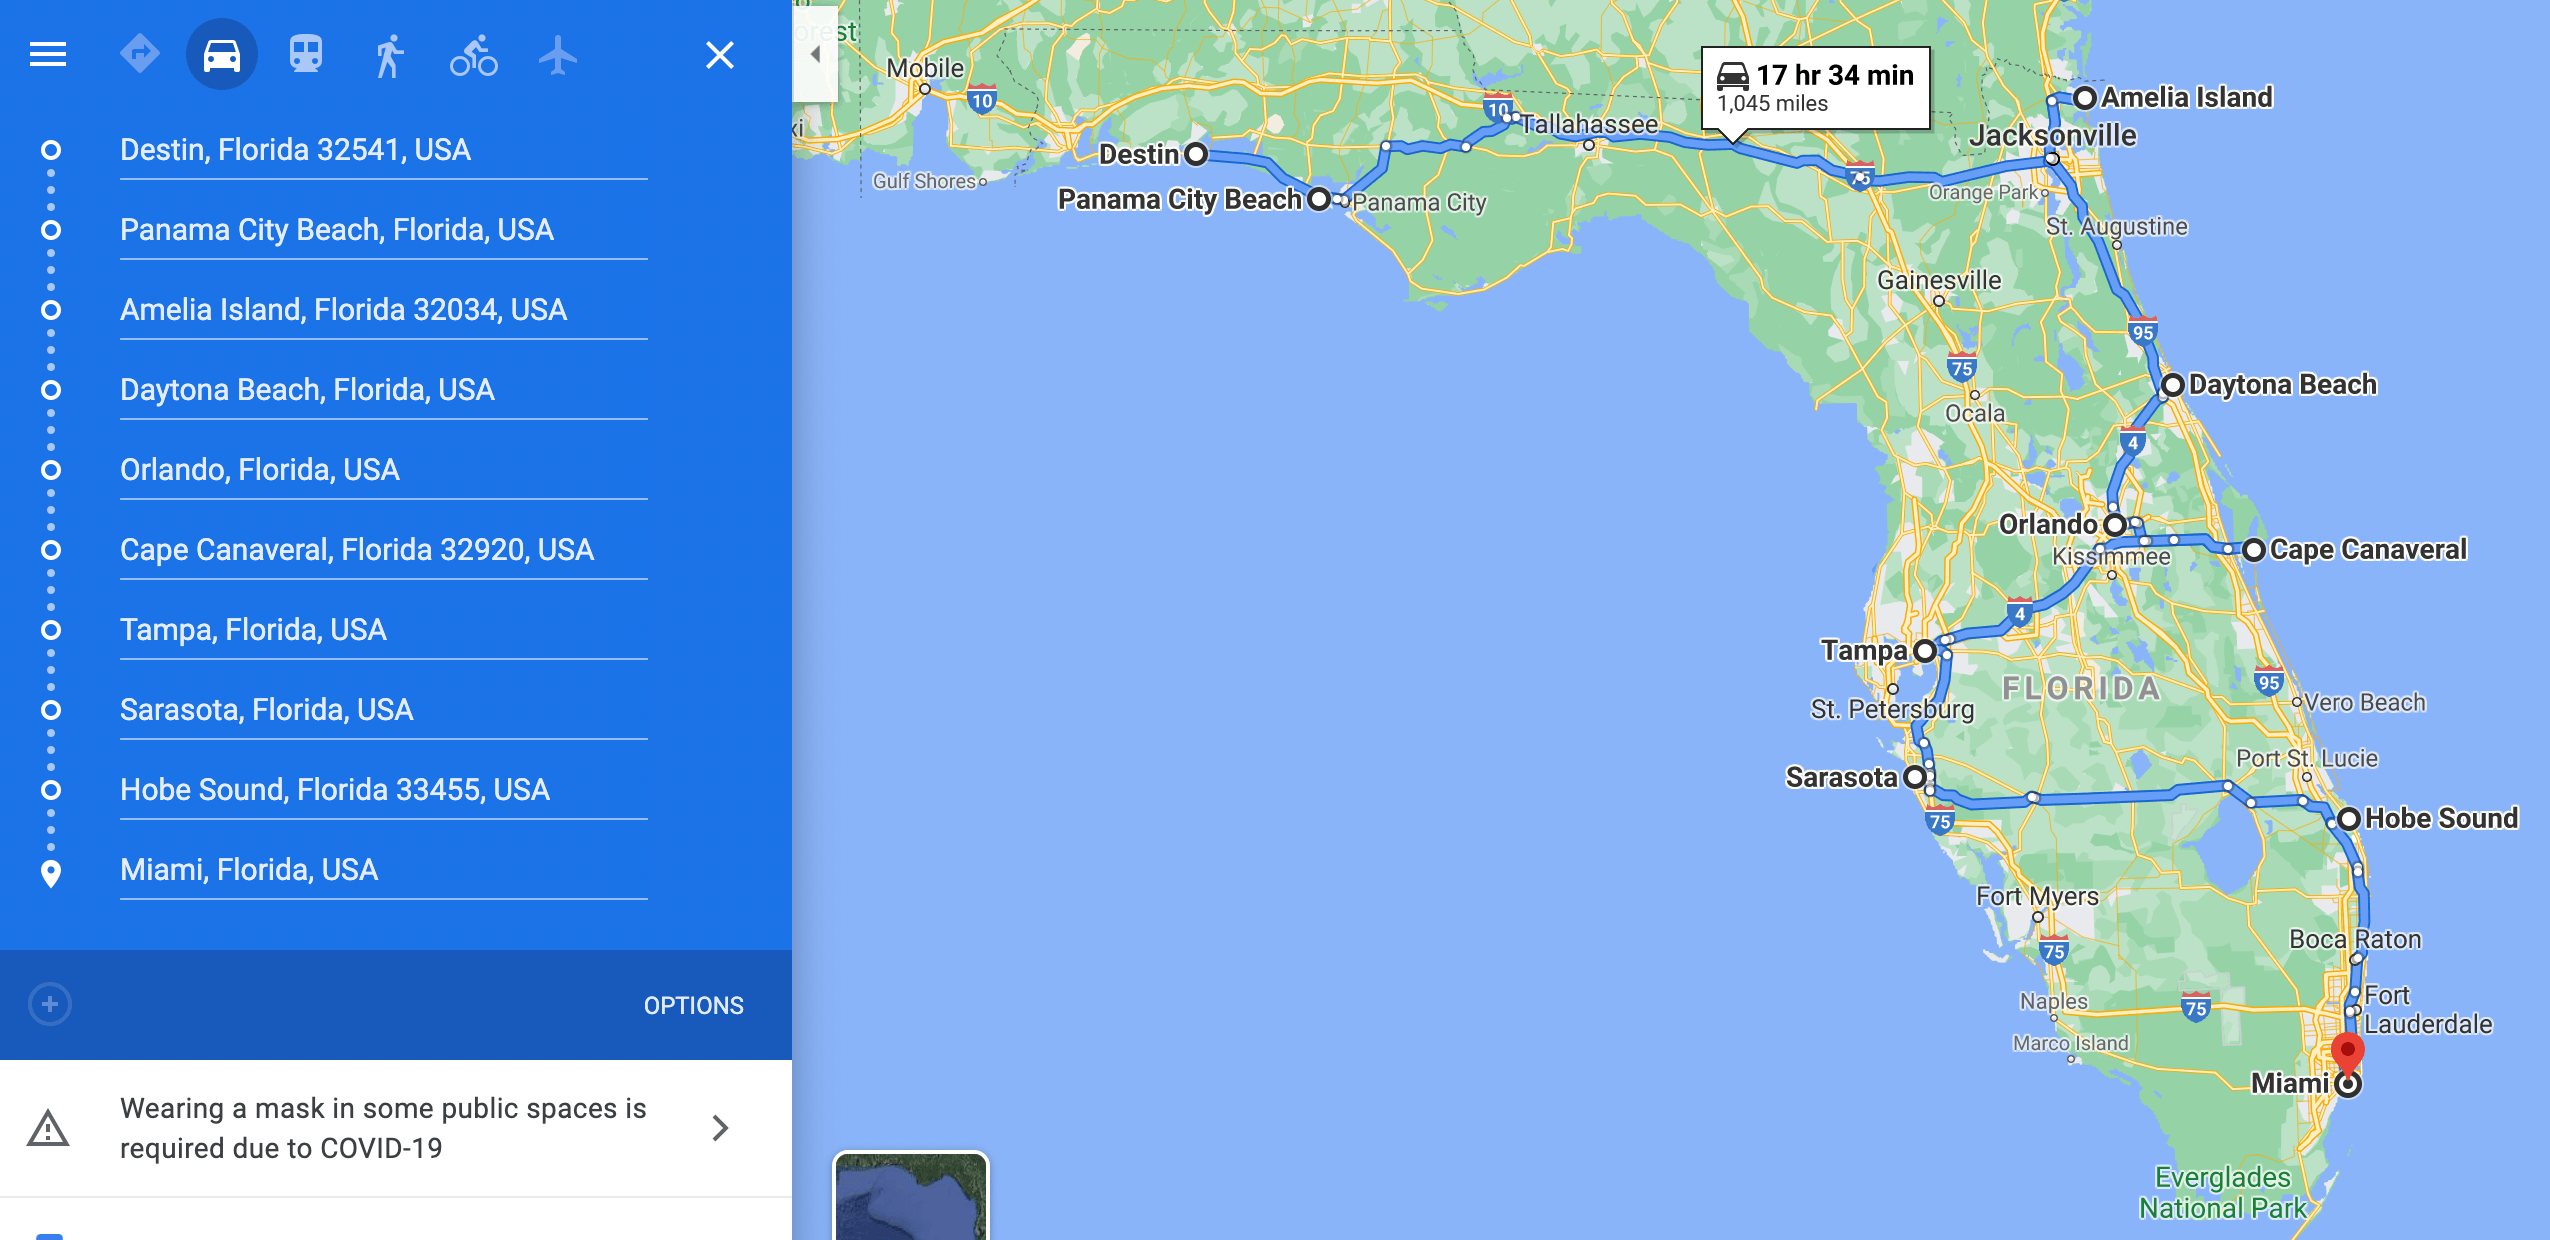 Road trip in Florida